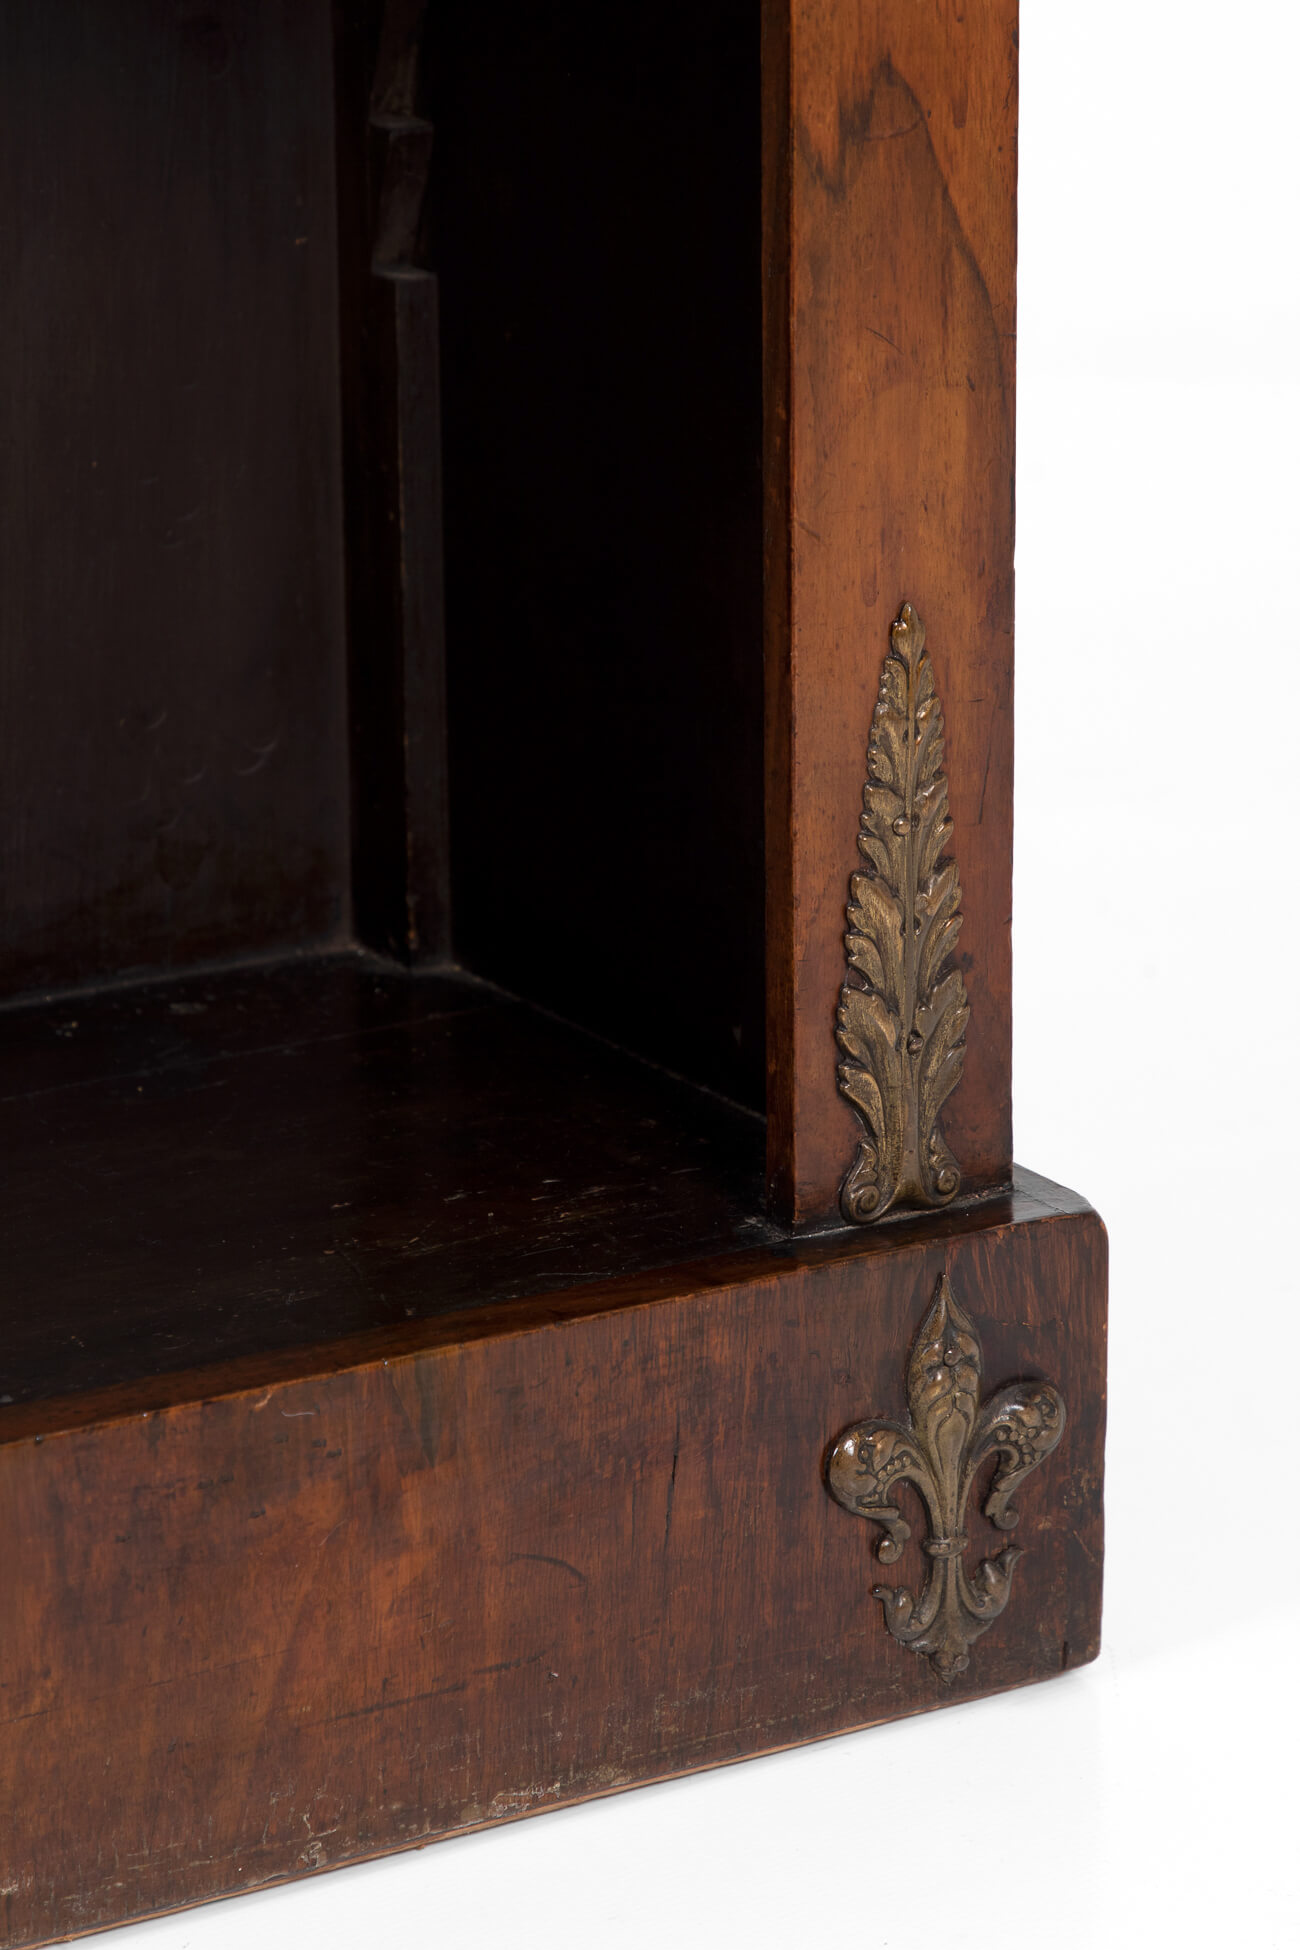 Antique ormolu mount open bookcase from Regency period